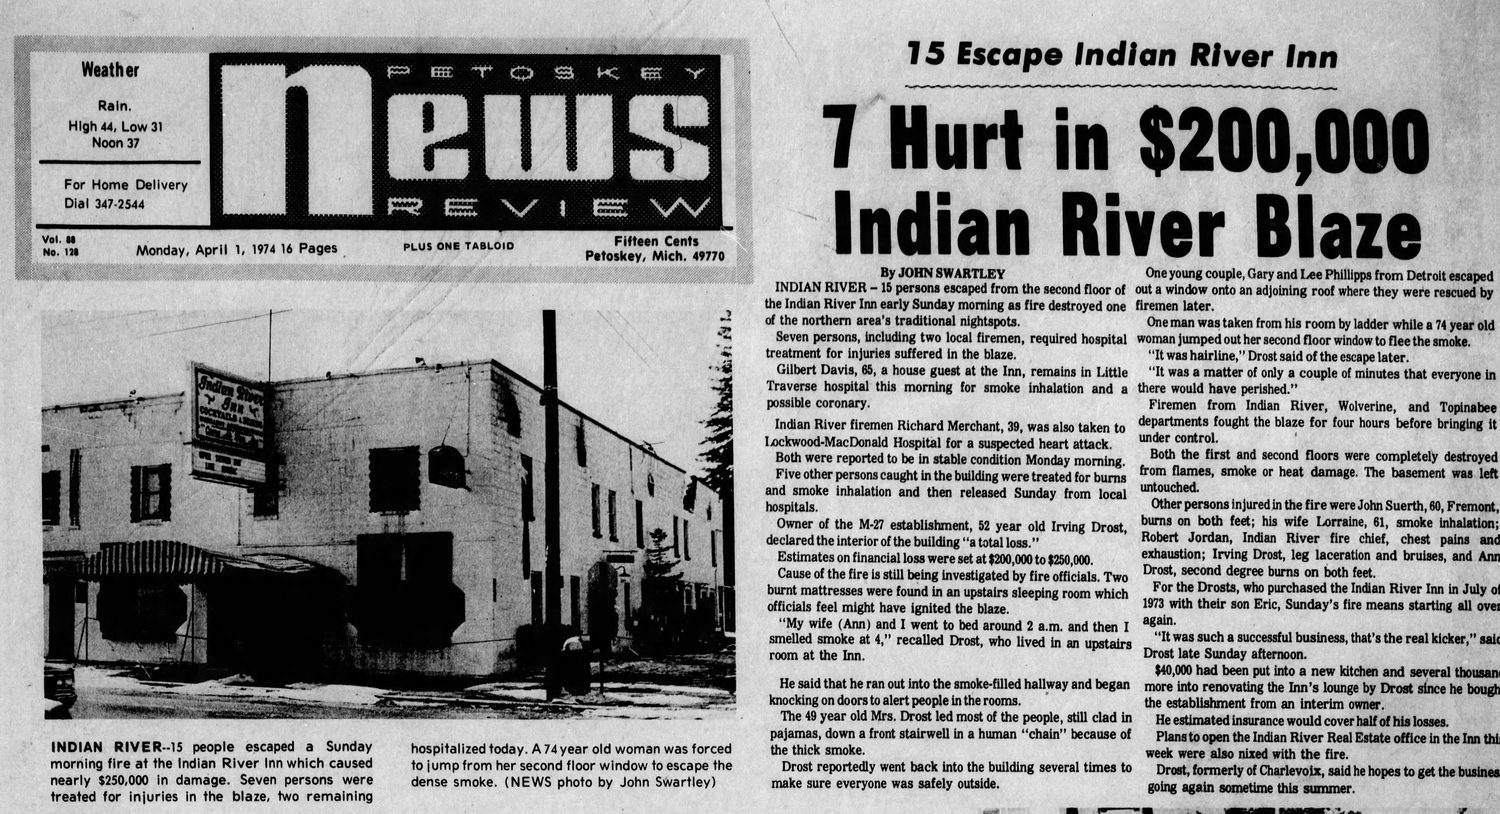 Indian River Inn (Brass Rail Bar & Grill) - Apr 1 1974 Article On Fire